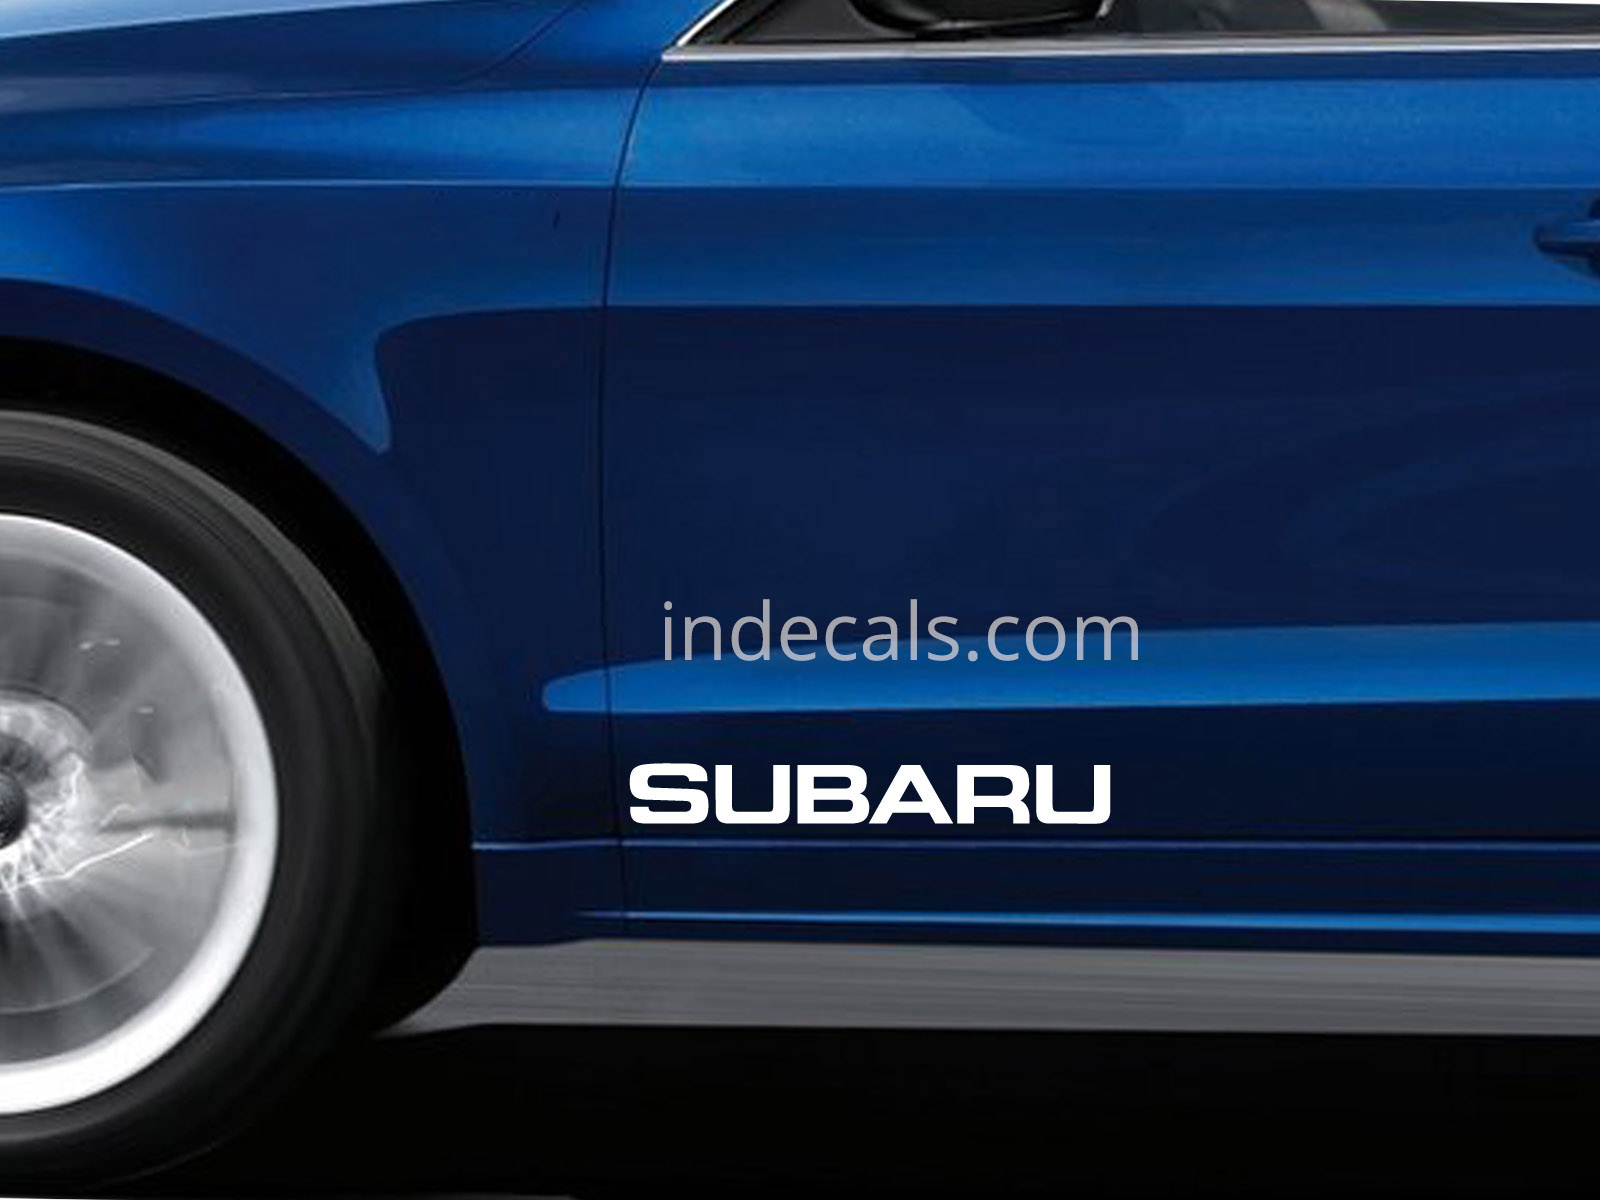 2 x Subaru Stickers for Doors Large - White